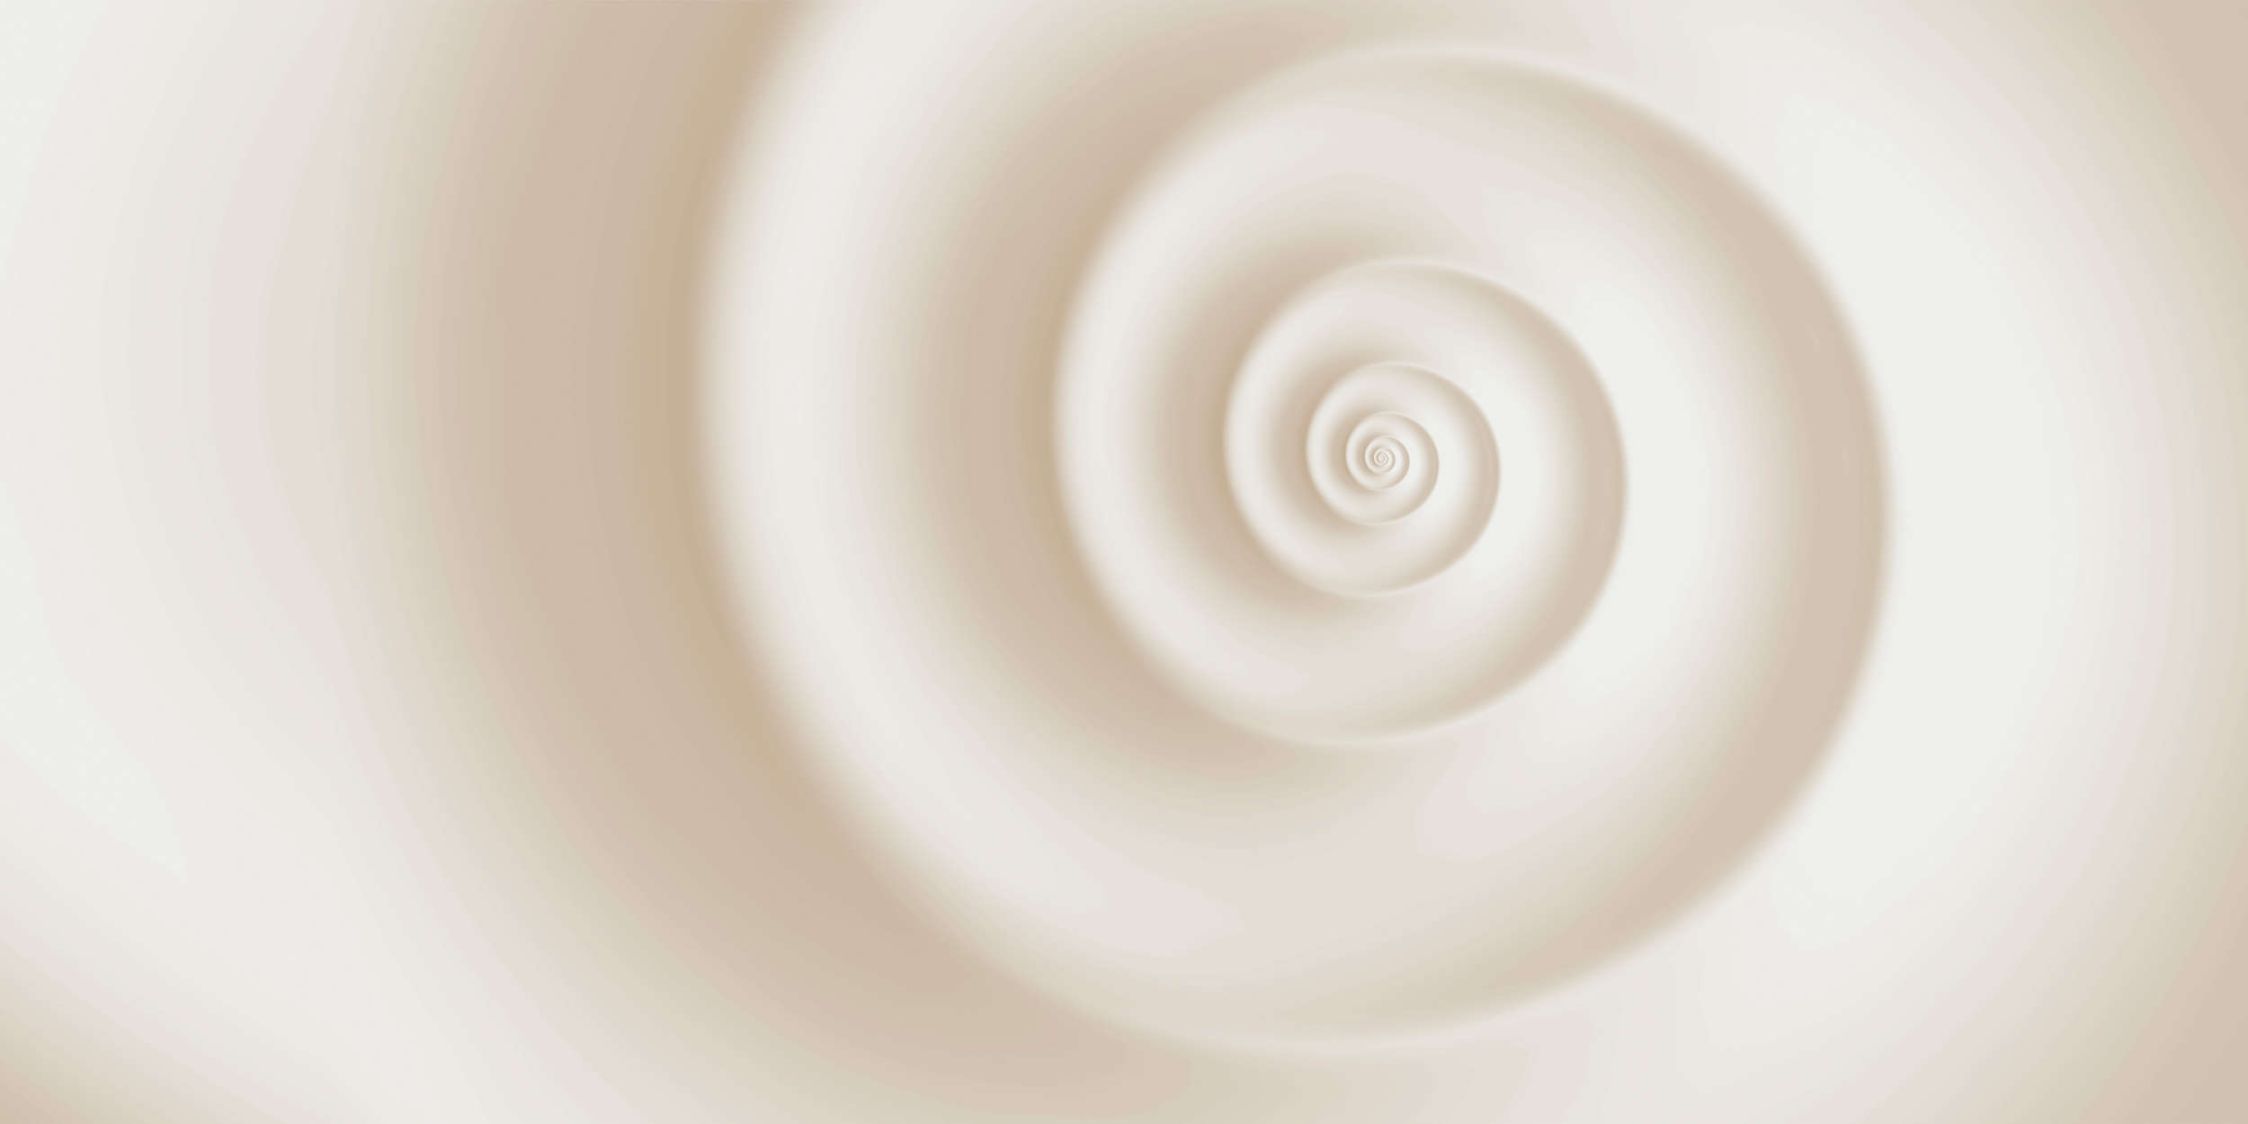             Fotomural »remolino« - Ligero dibujo en espiral - Tela no tejida lisa y mate
        